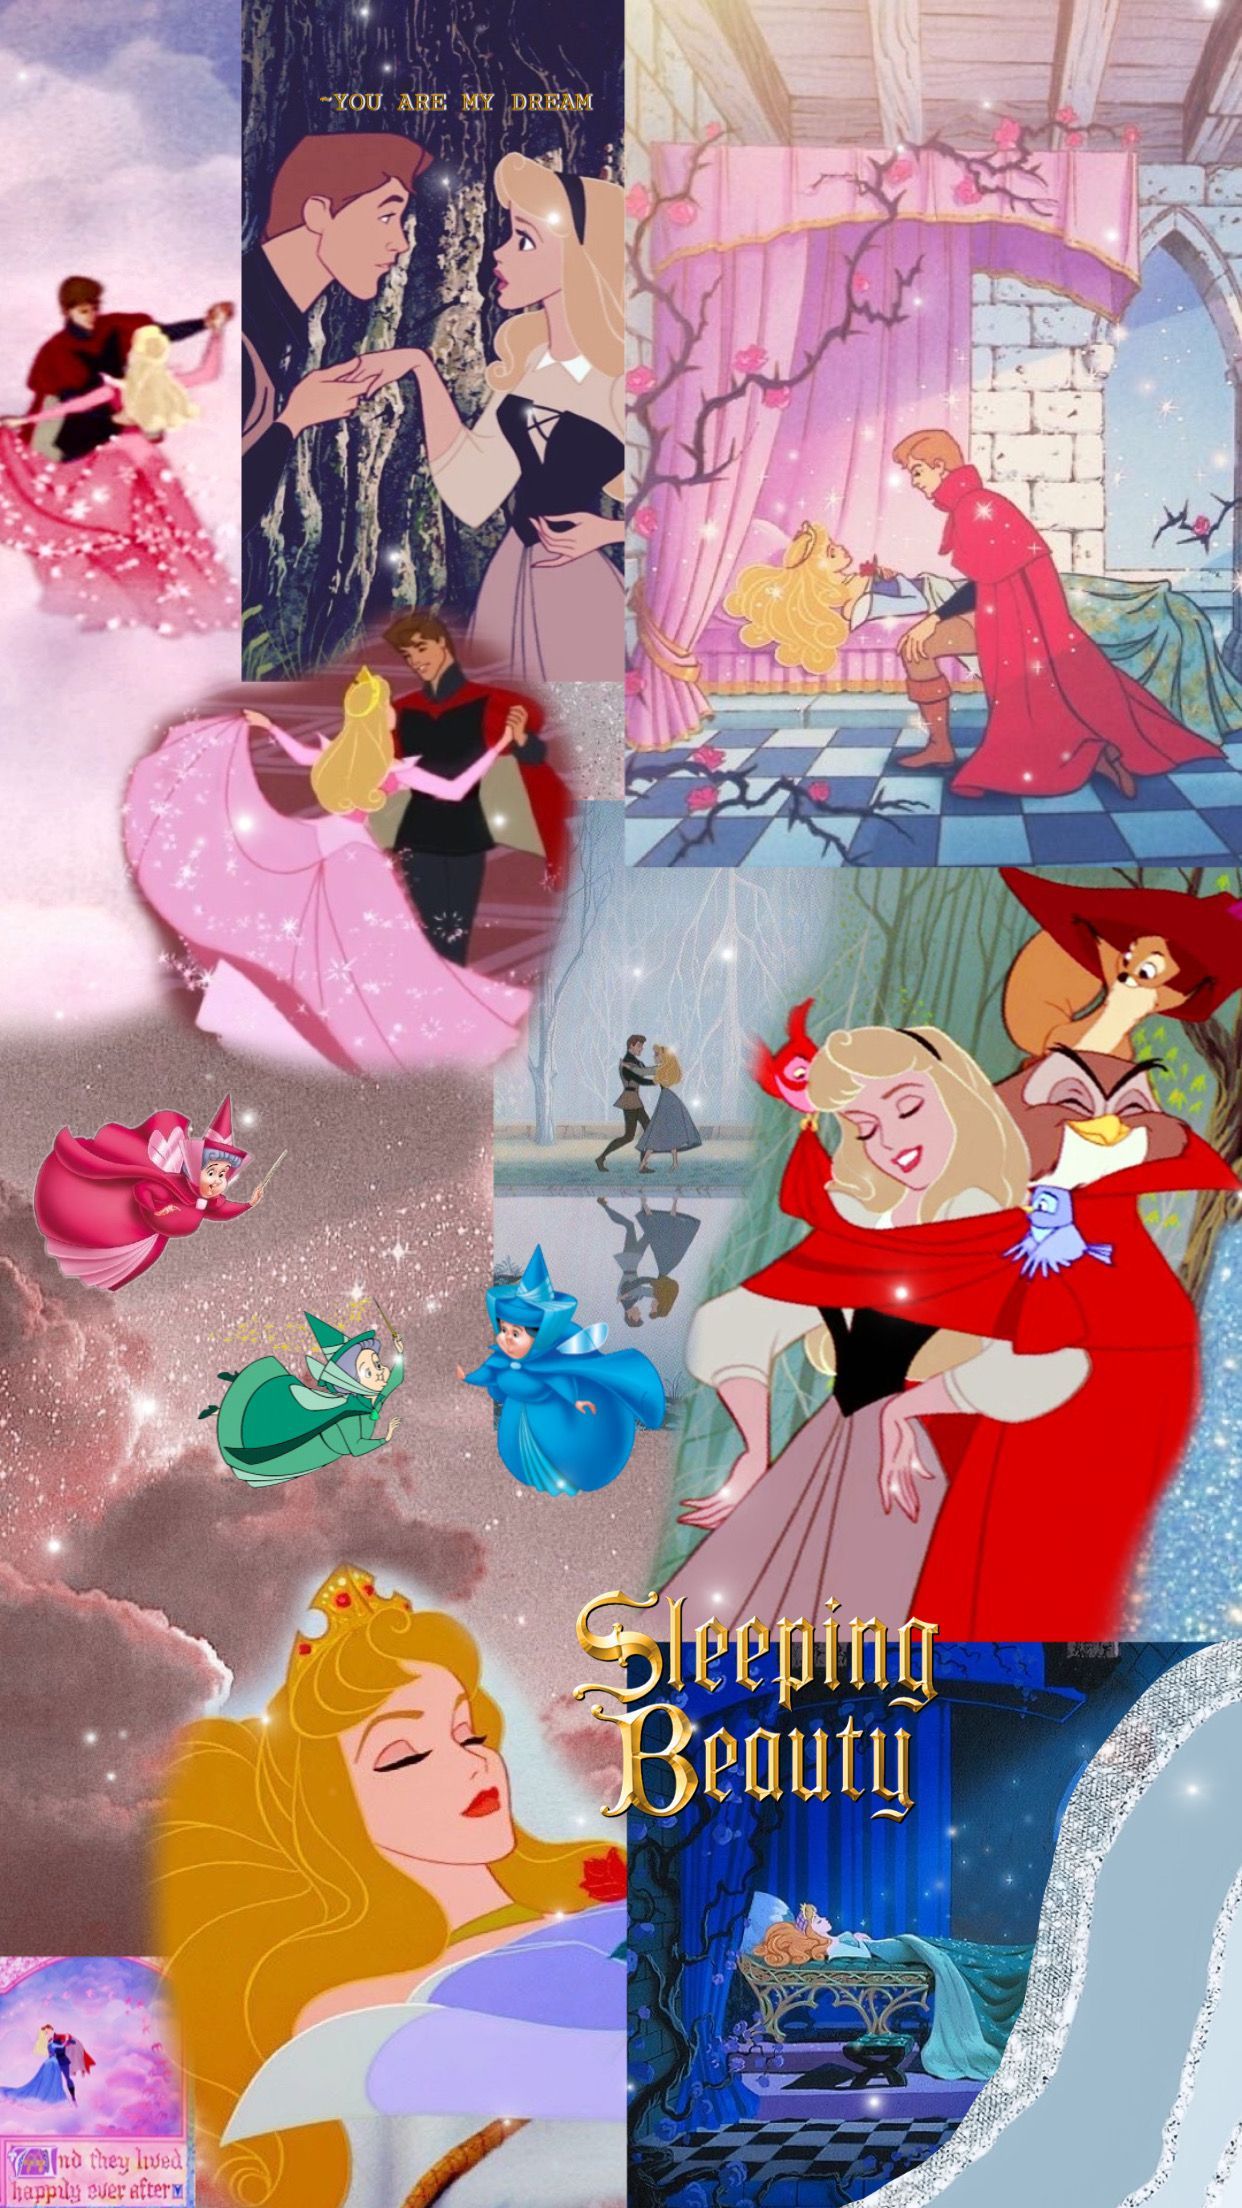 Sleeping Beauty Aurora Collage Wallpaper. Wallpaper iphone disney, Disney fun, Disney aesthetic